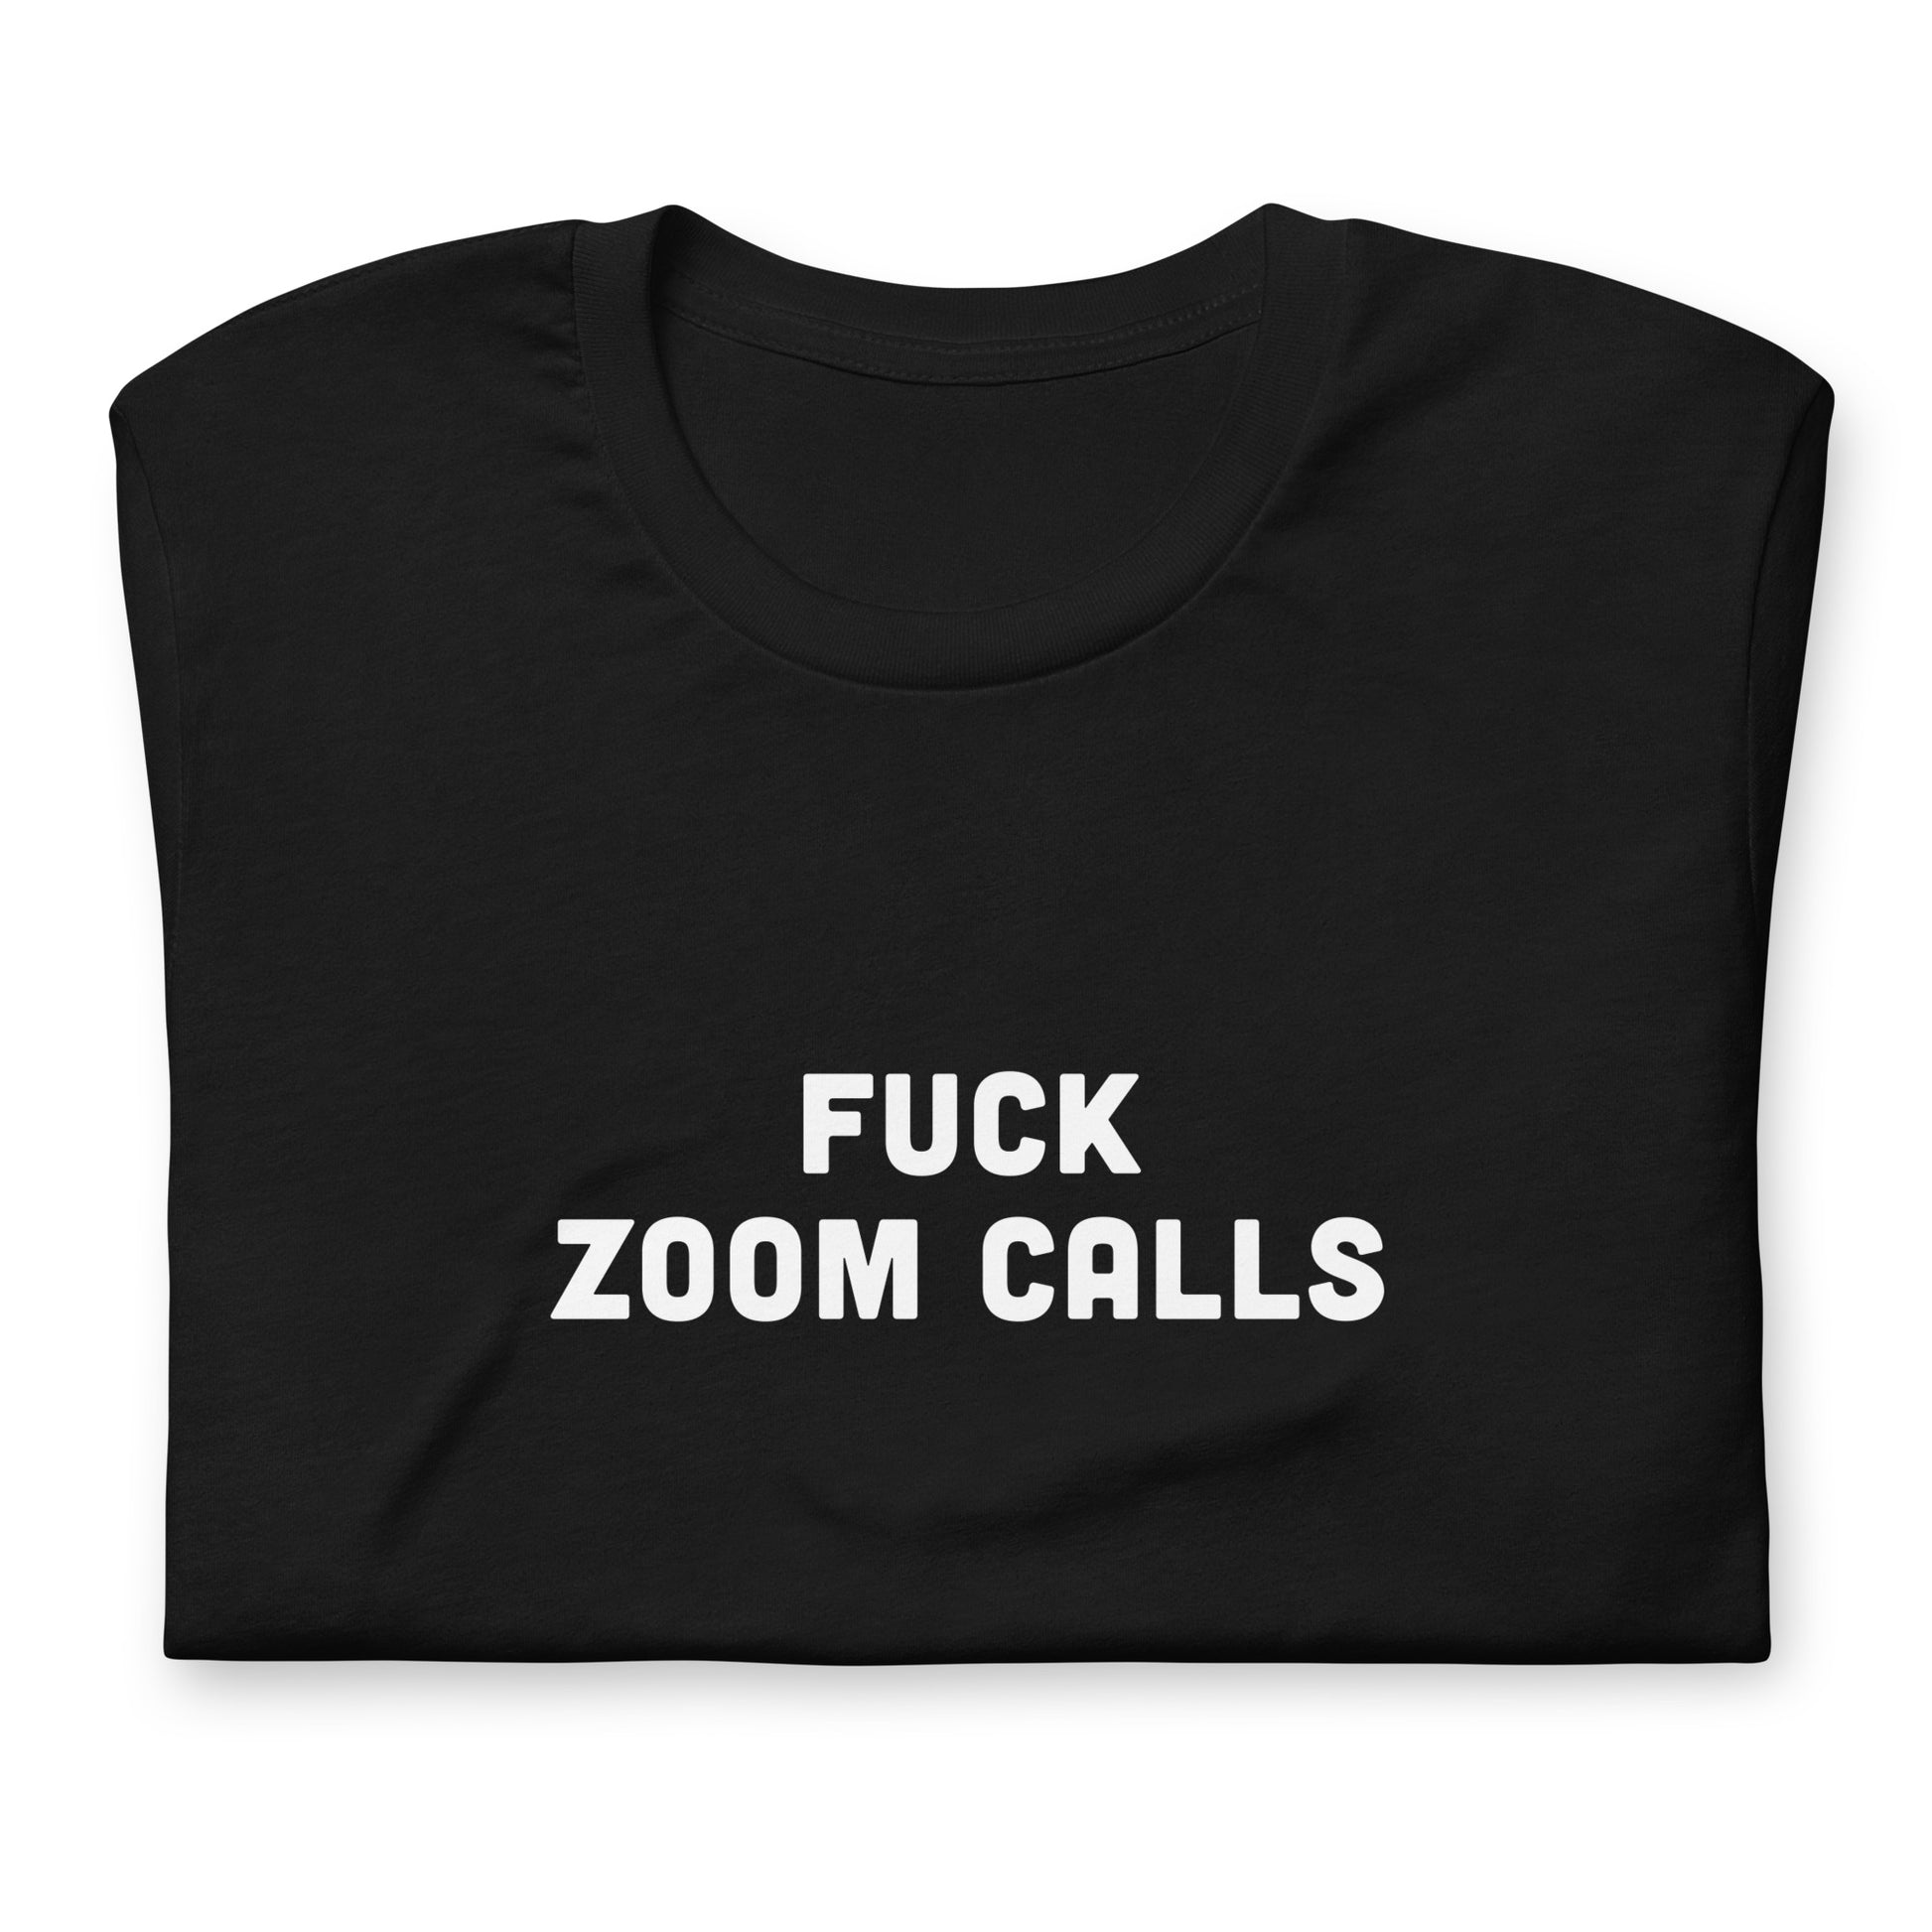 Fuck Zoom Calls T-Shirt Size M Color Black